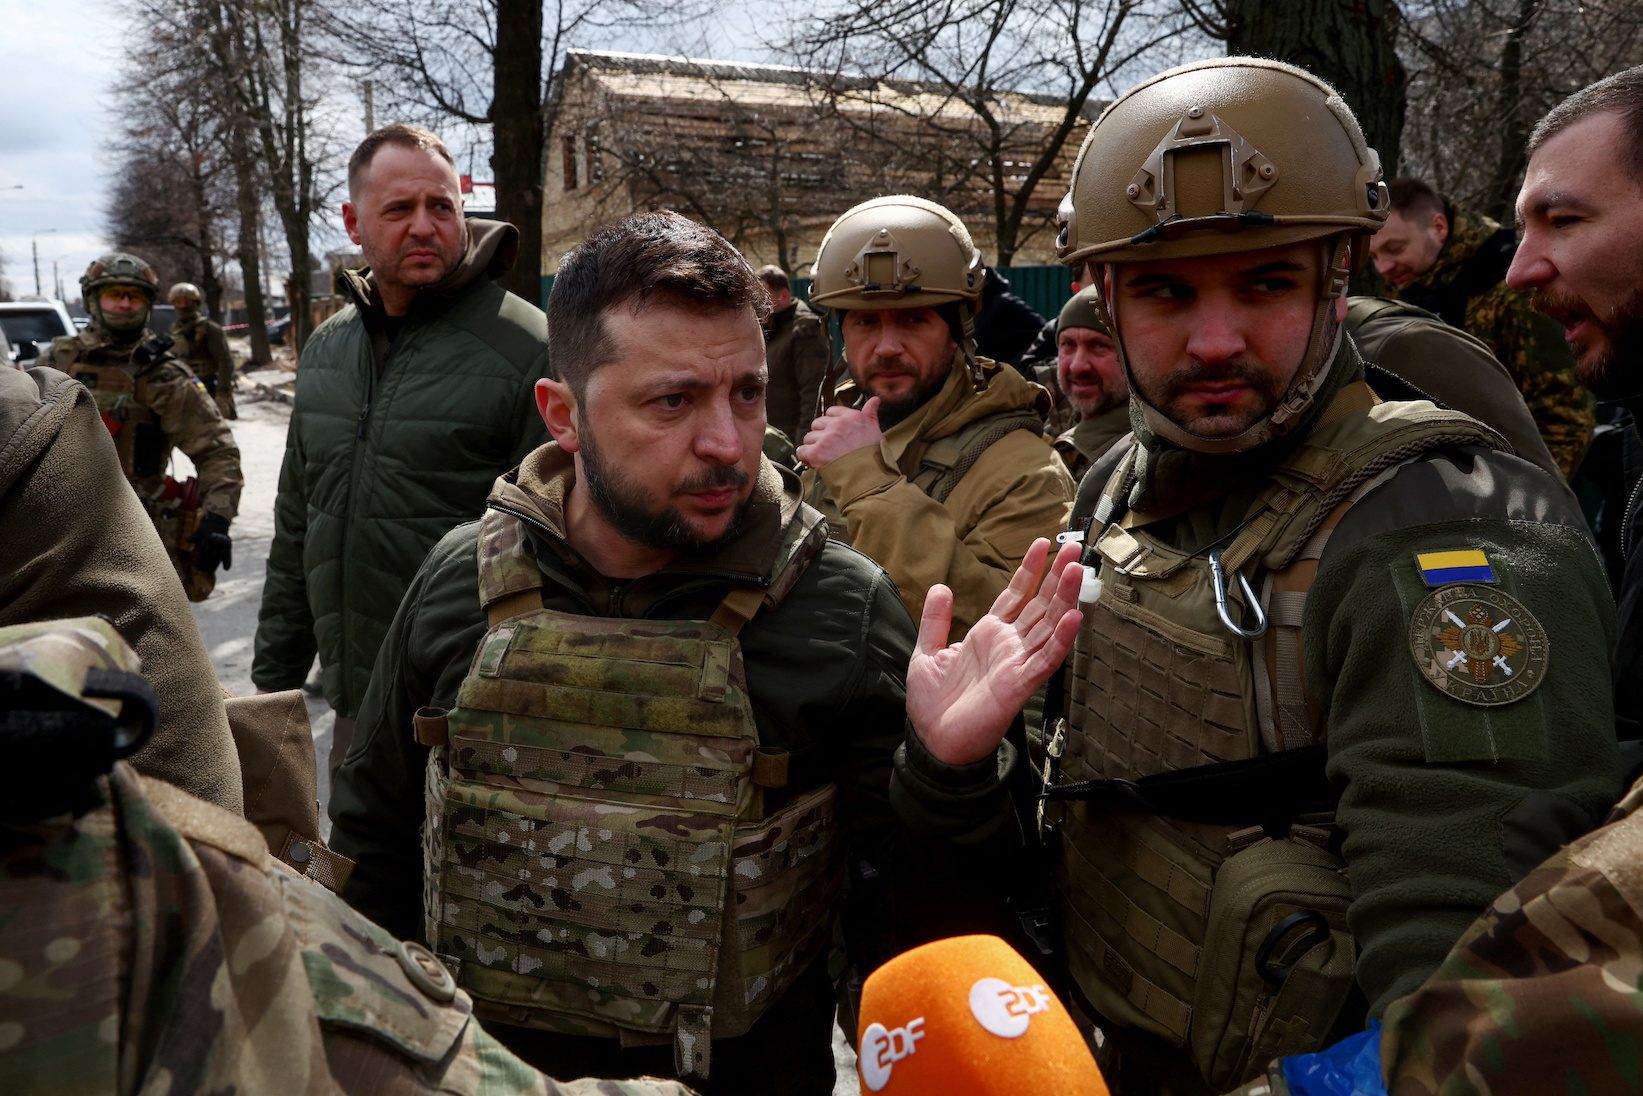 Ukrainian president says Russian actions make negotiations harder